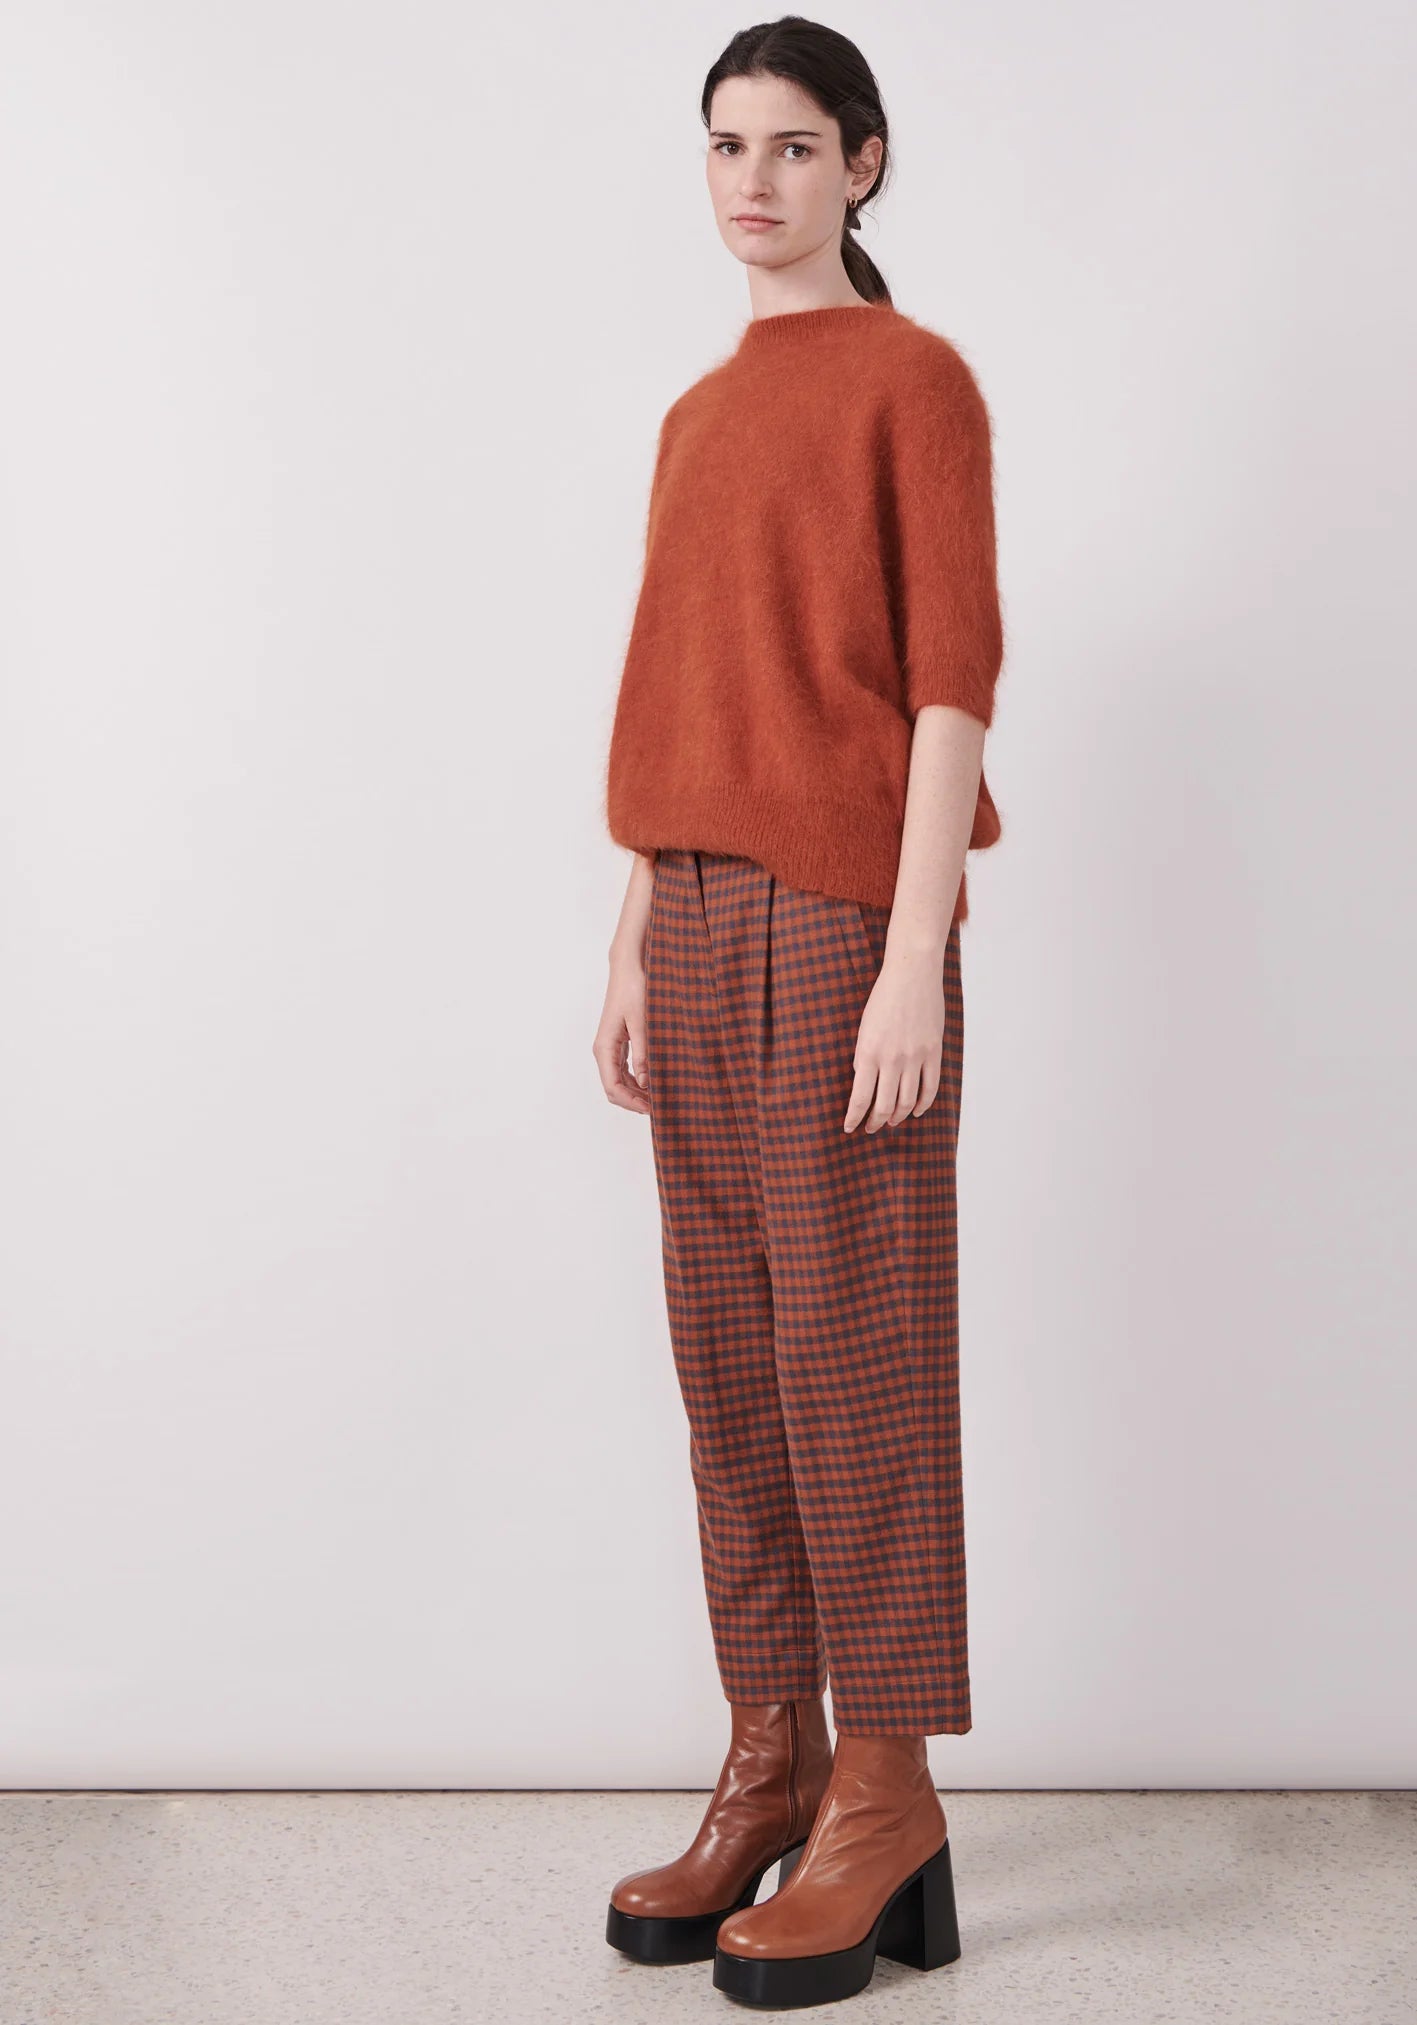 POL Clothing - Genus Angora Knit - Rust